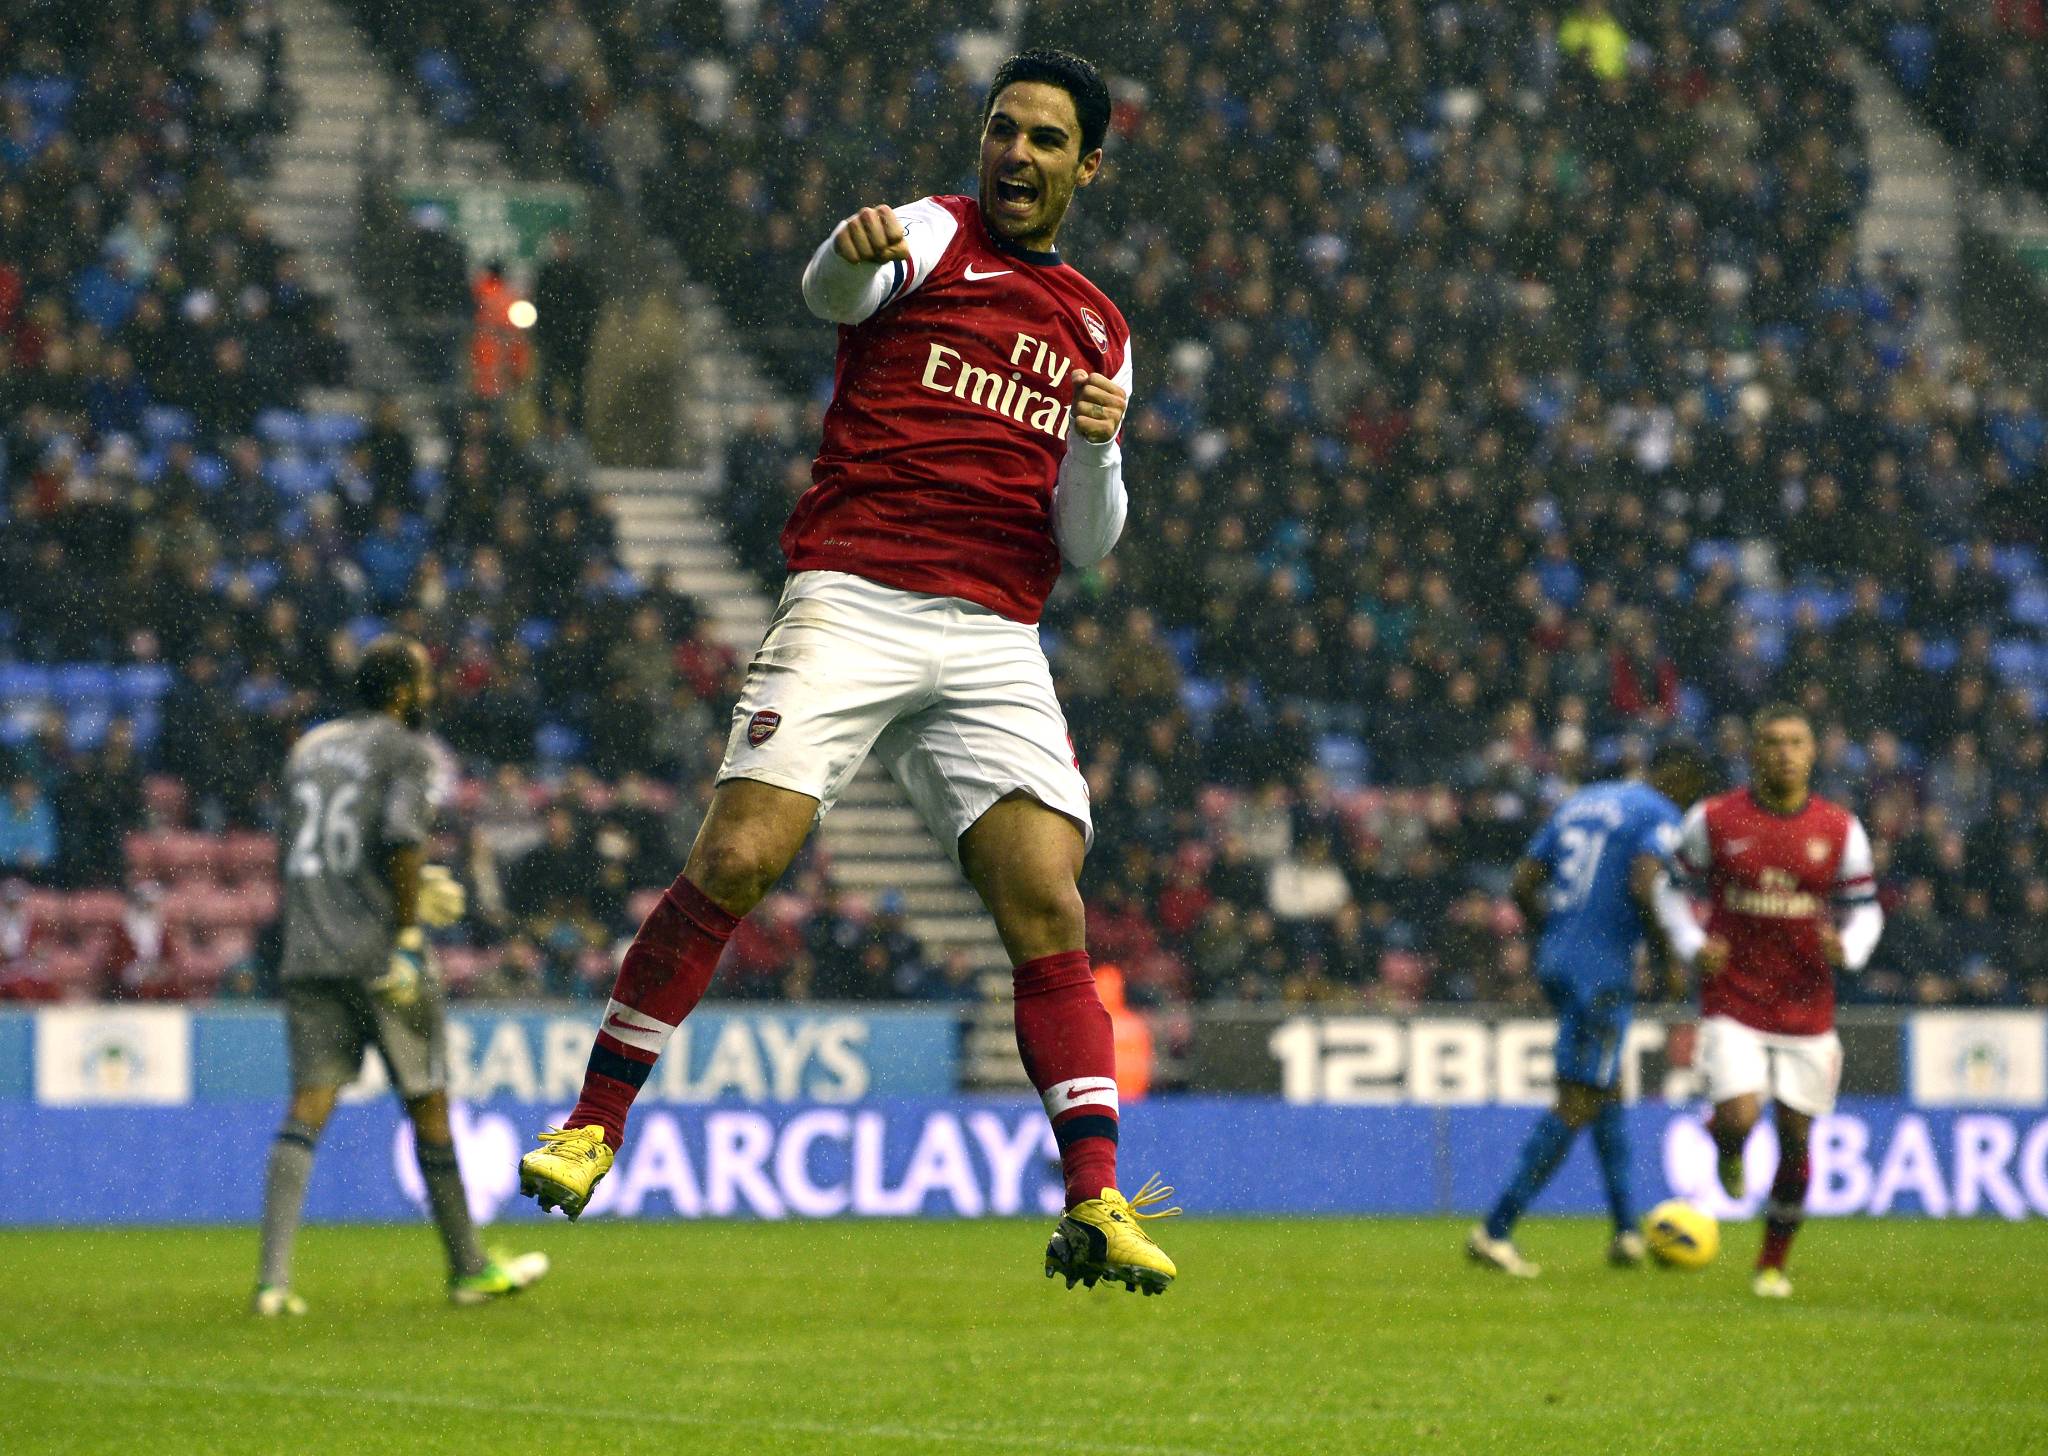 Arsenal's Spanish midfielder Mikel Arteta celebrates scoring the opening goal from the penalty spot